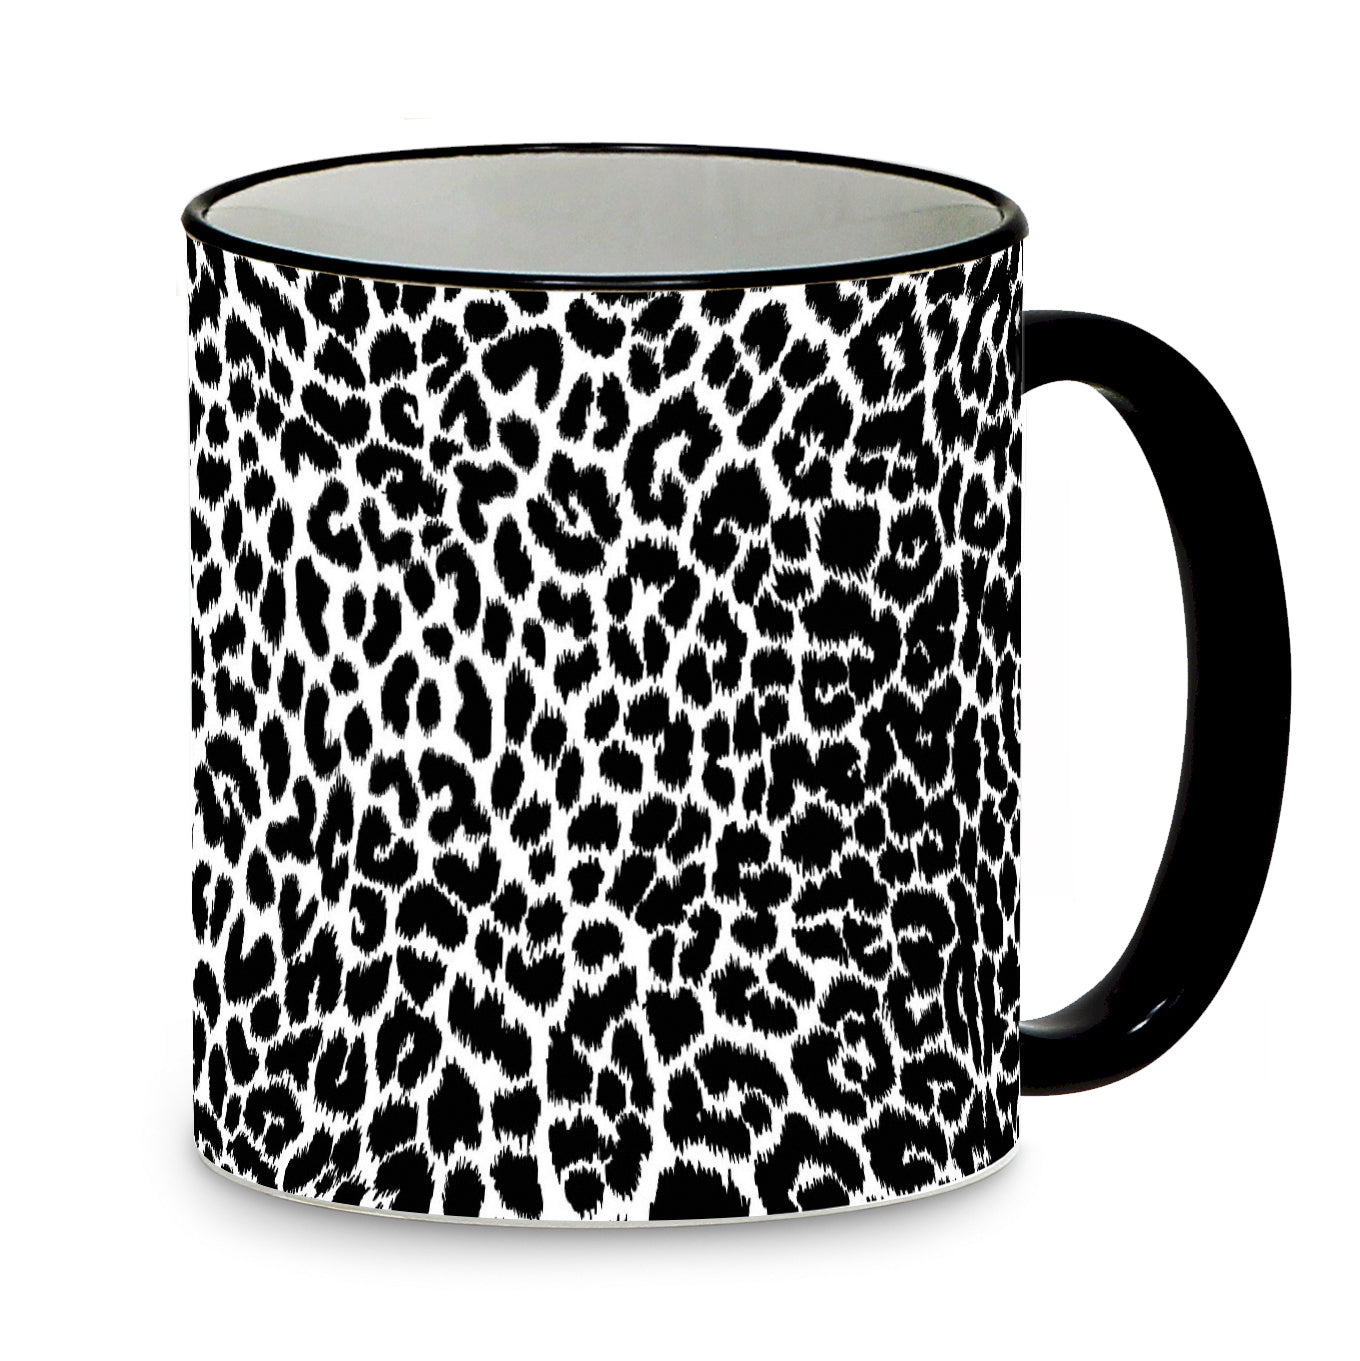 SUBLIMART: Pets Art - Beautiful Black & White Leopard Design Mug with Black Rim and Handle